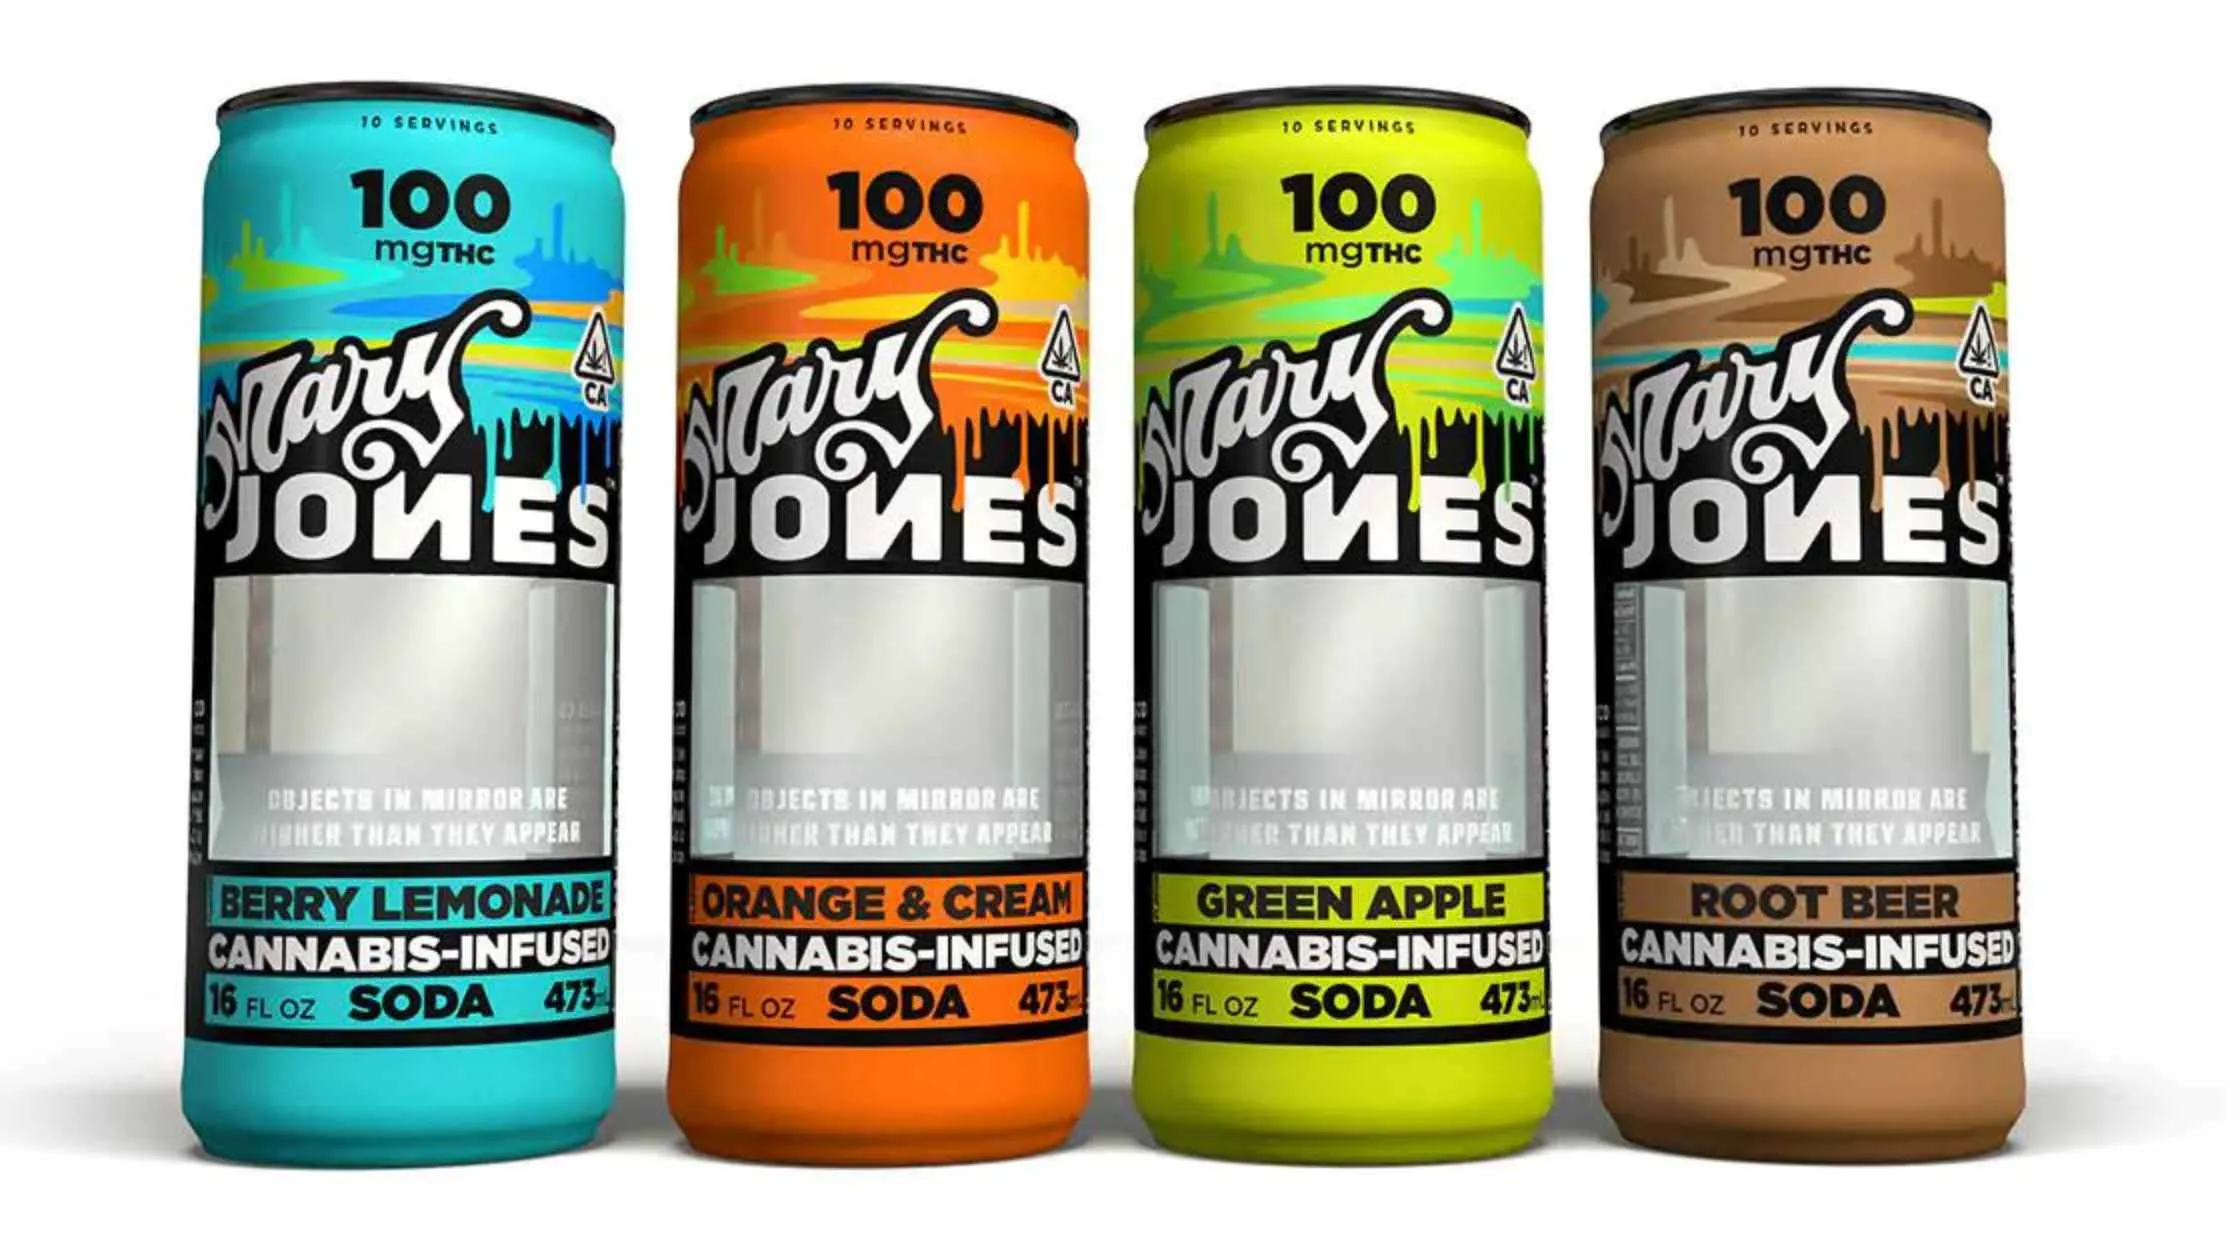 Jones Soda Plans Further Upturn Into Cannabis